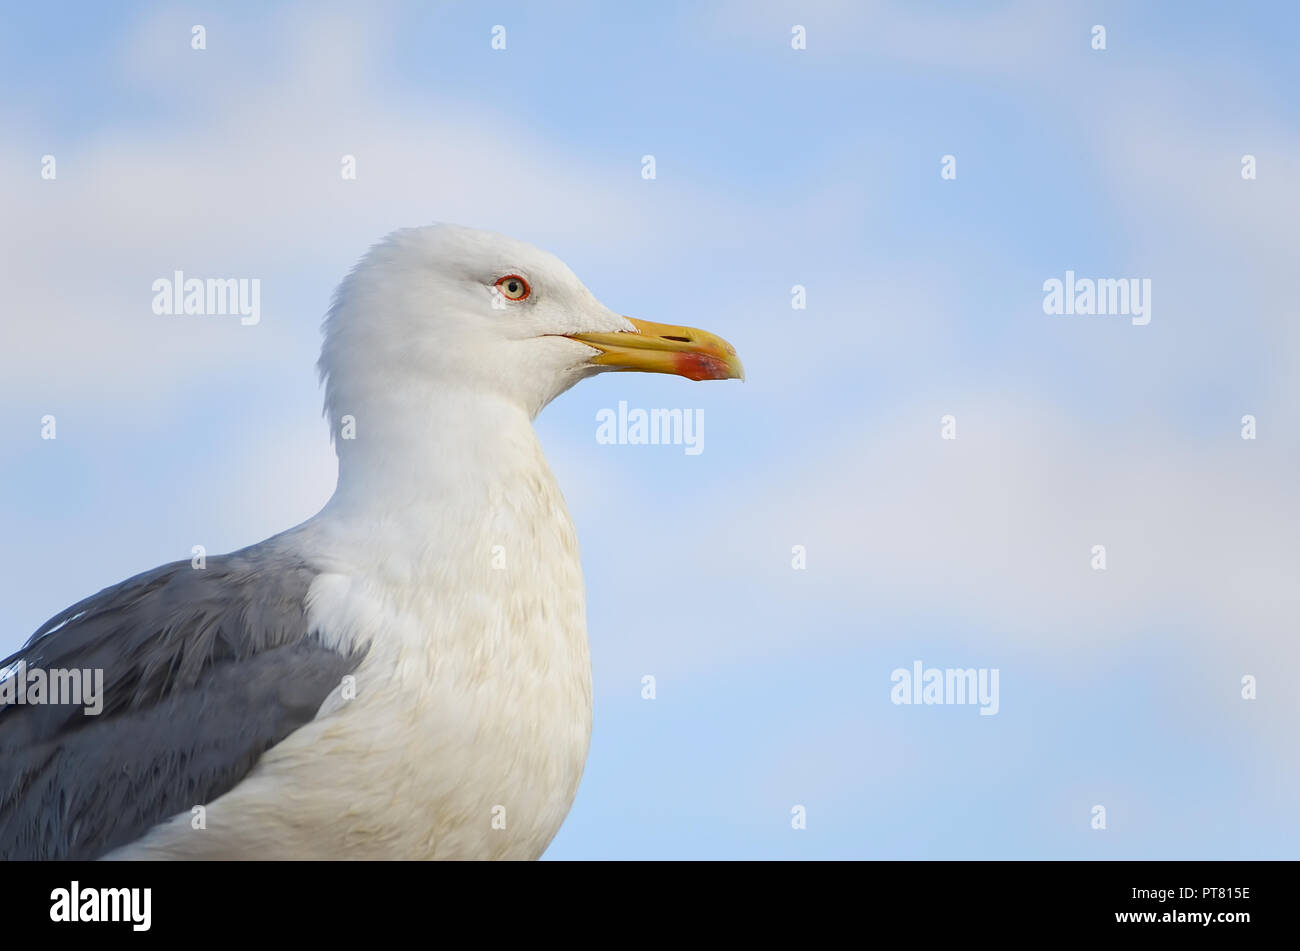 Seagulls profile close up against a blue sky. Stock Photo